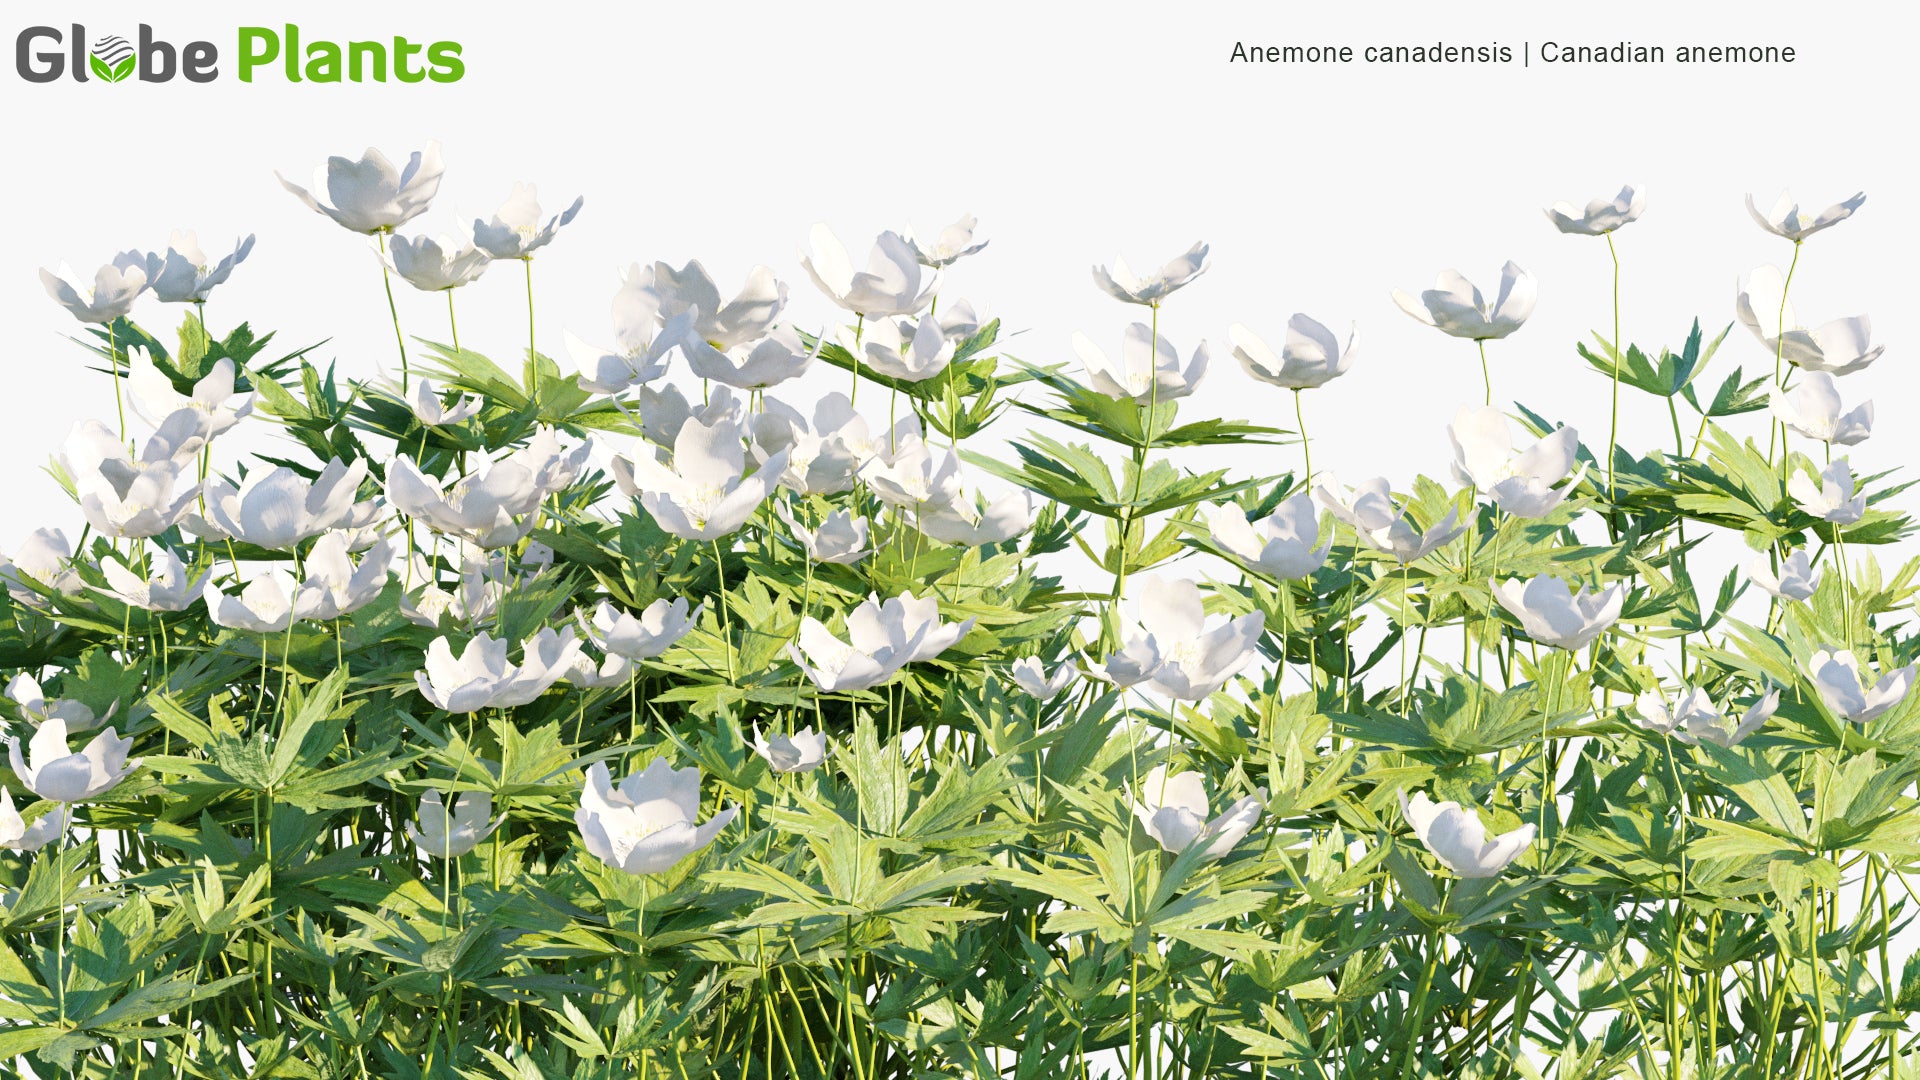 Anemone Canadensis - Canada Anemone, Round-Headed Anemone, Meadow Anemone, Windflower, Crowfoot